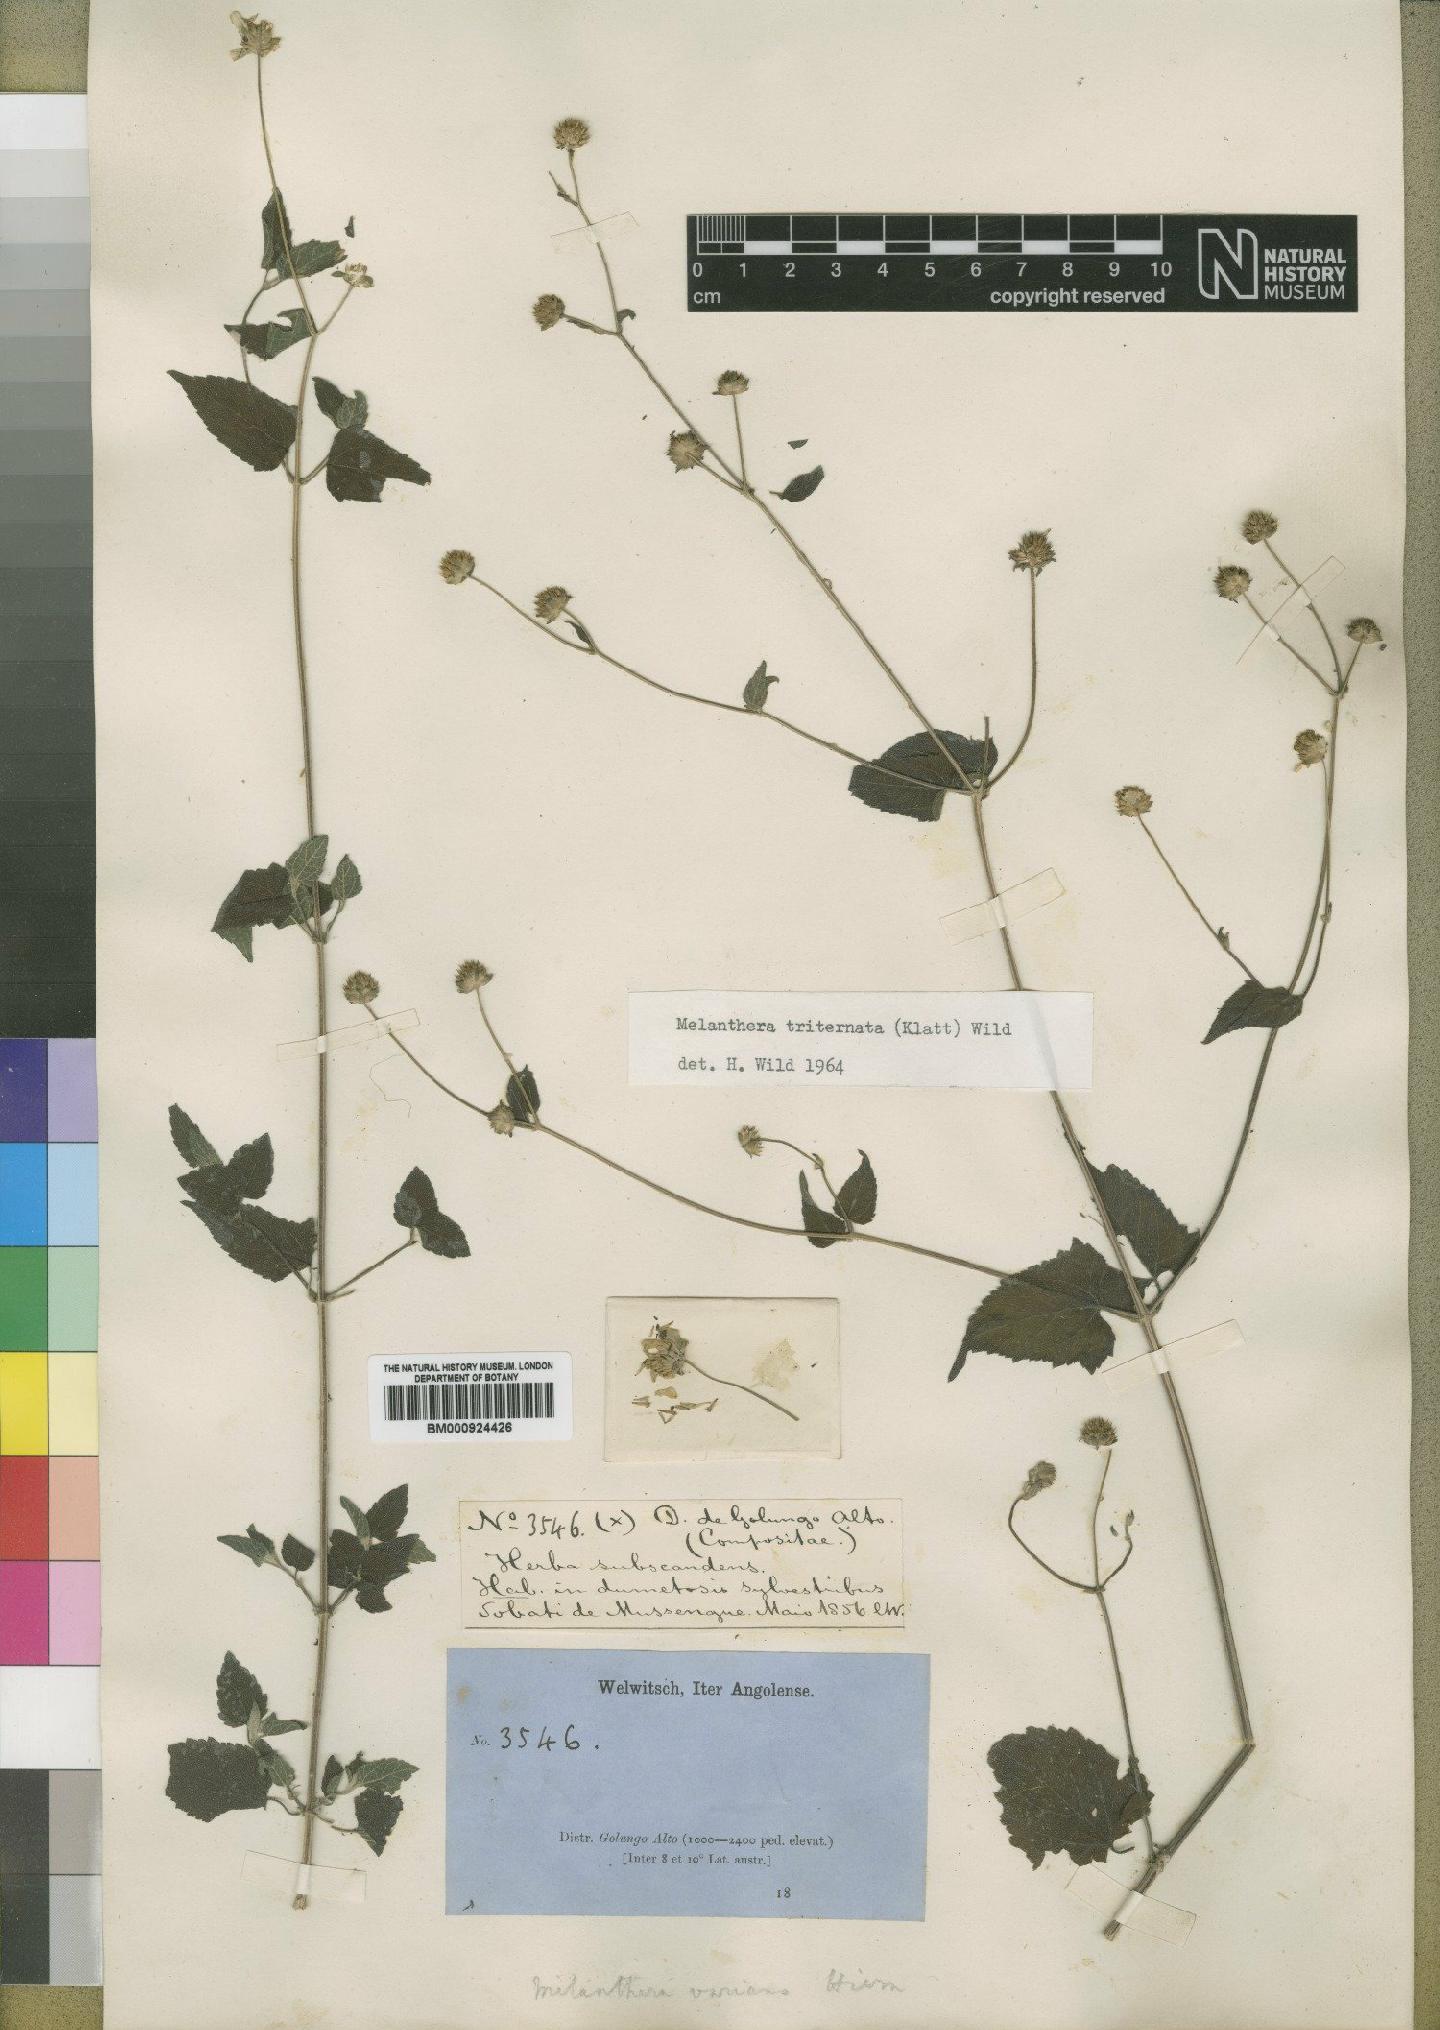 To NHMUK collection (Melanthera triternata (Klatt) Wild; Syntype; NHMUK:ecatalogue:4529454)